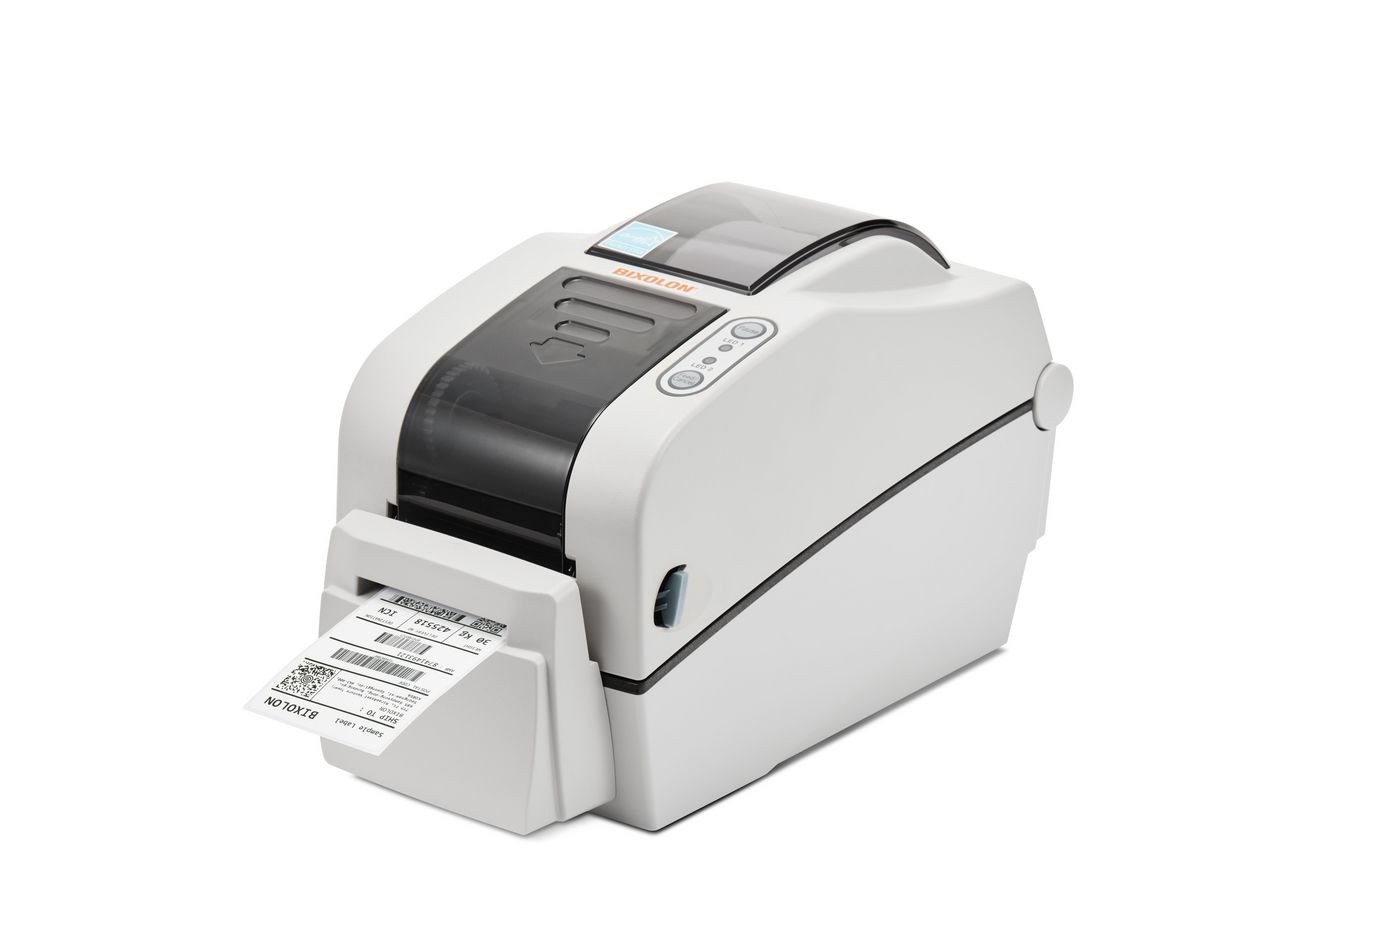 Slp-tx223 - Label Printer - Direct Thermal - USB / Serial / Parallel - Grey